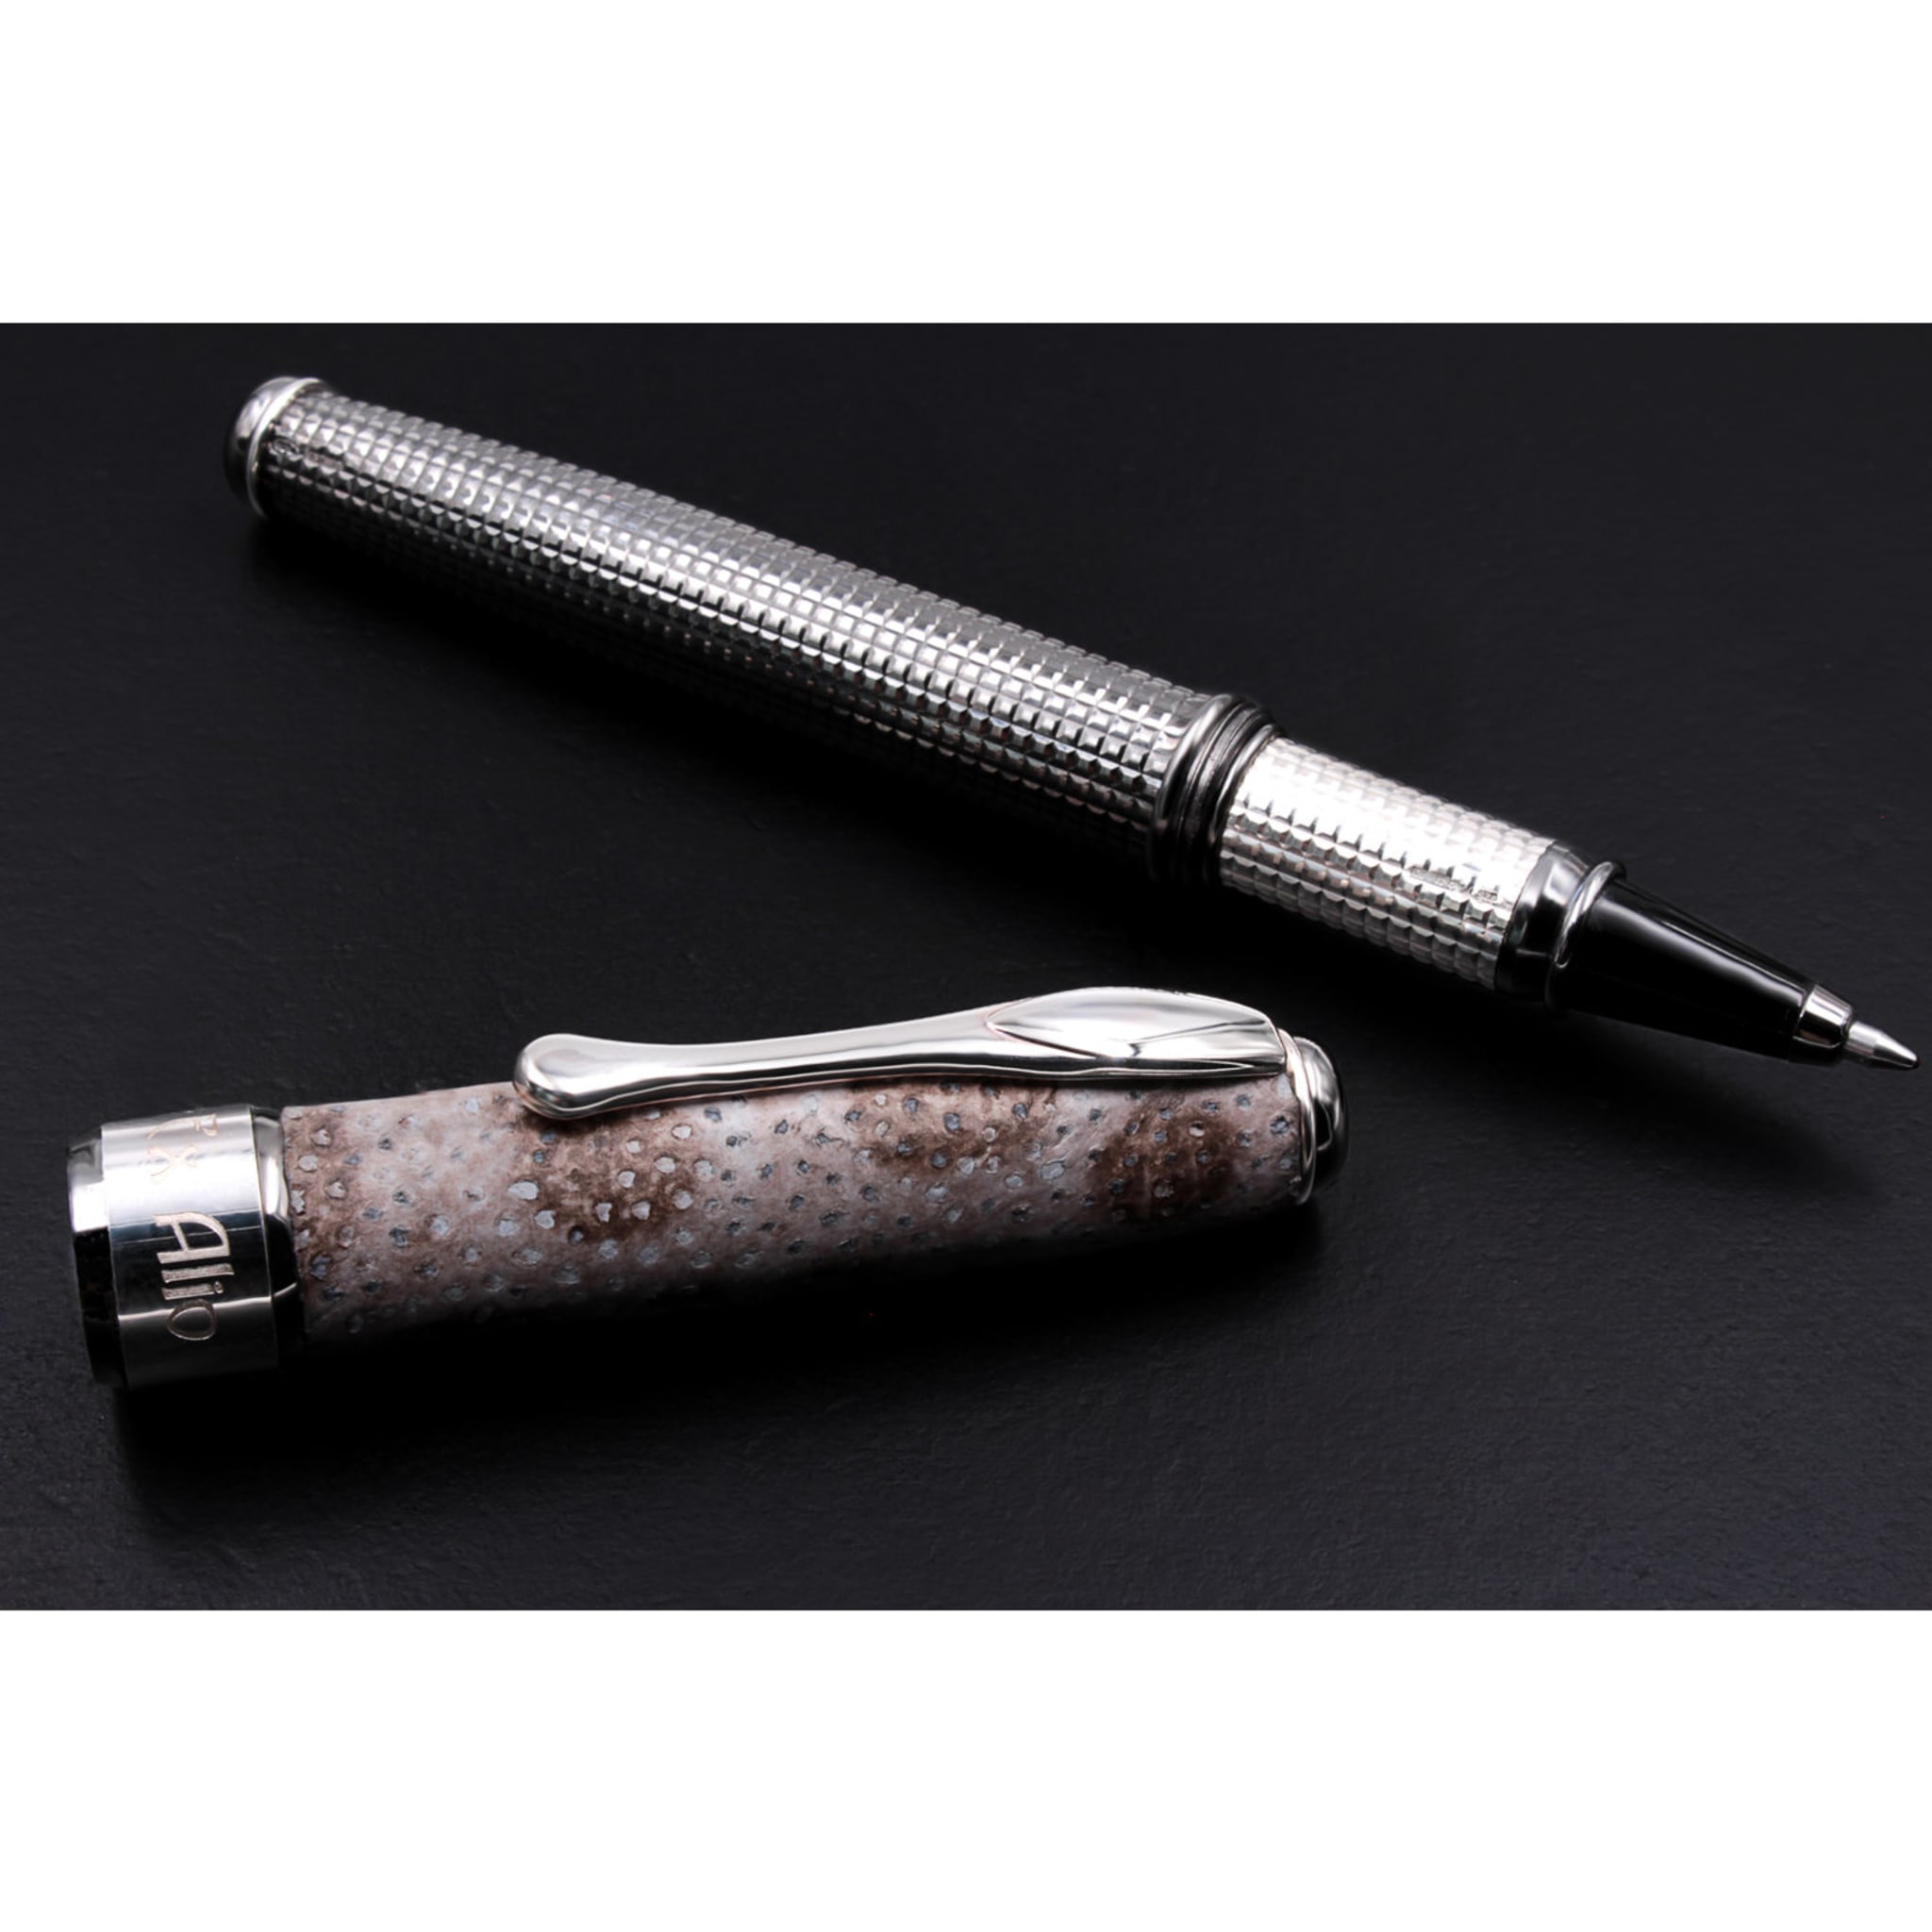 Silver/Deep-Sea Fish Leather Ballpoint Pen - Alternative view 1